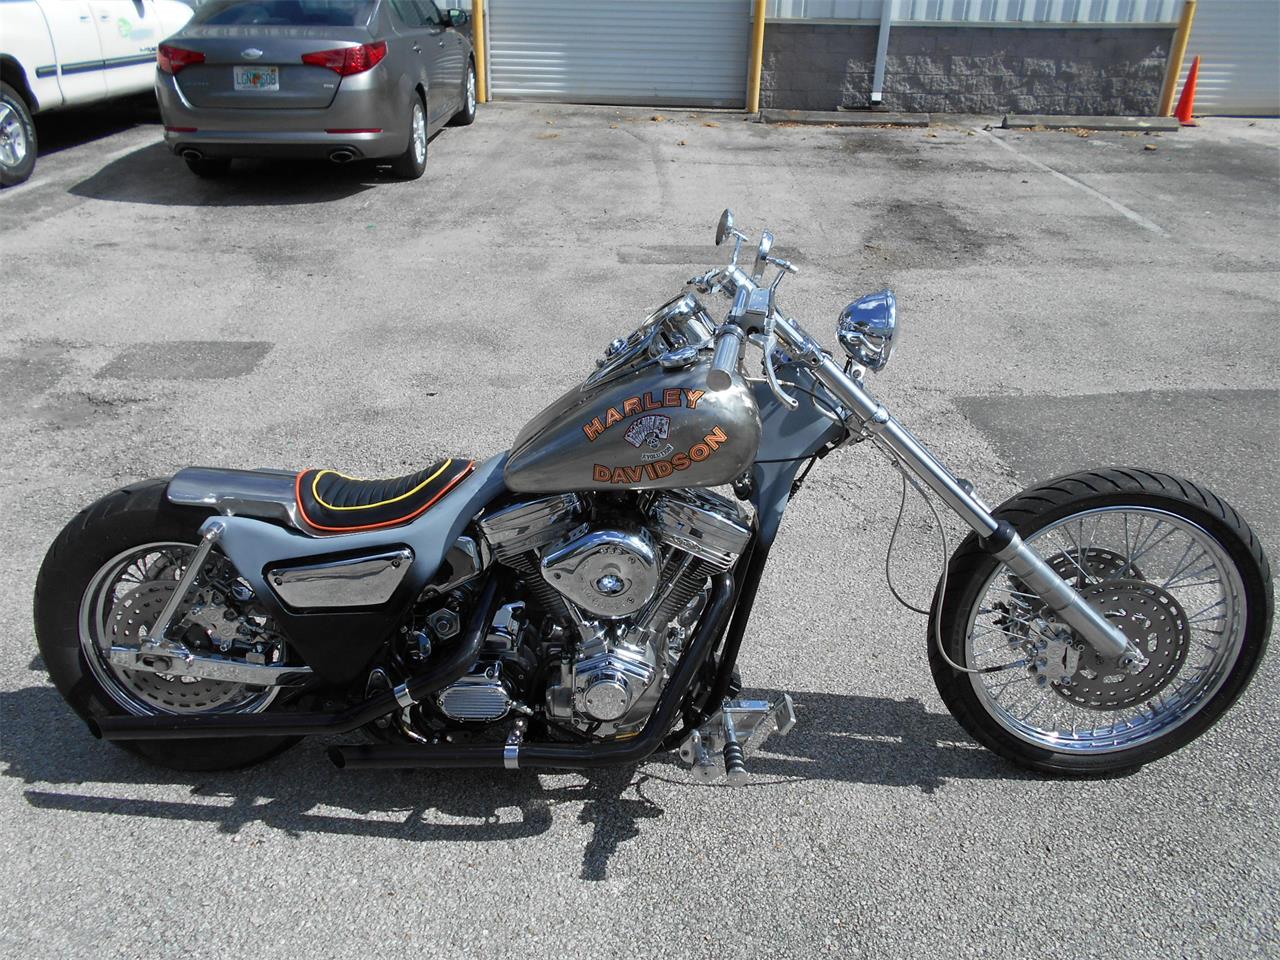 Harley Davidson And The Marlboro Man Bike For Sale Off 74 Medpharmres Com